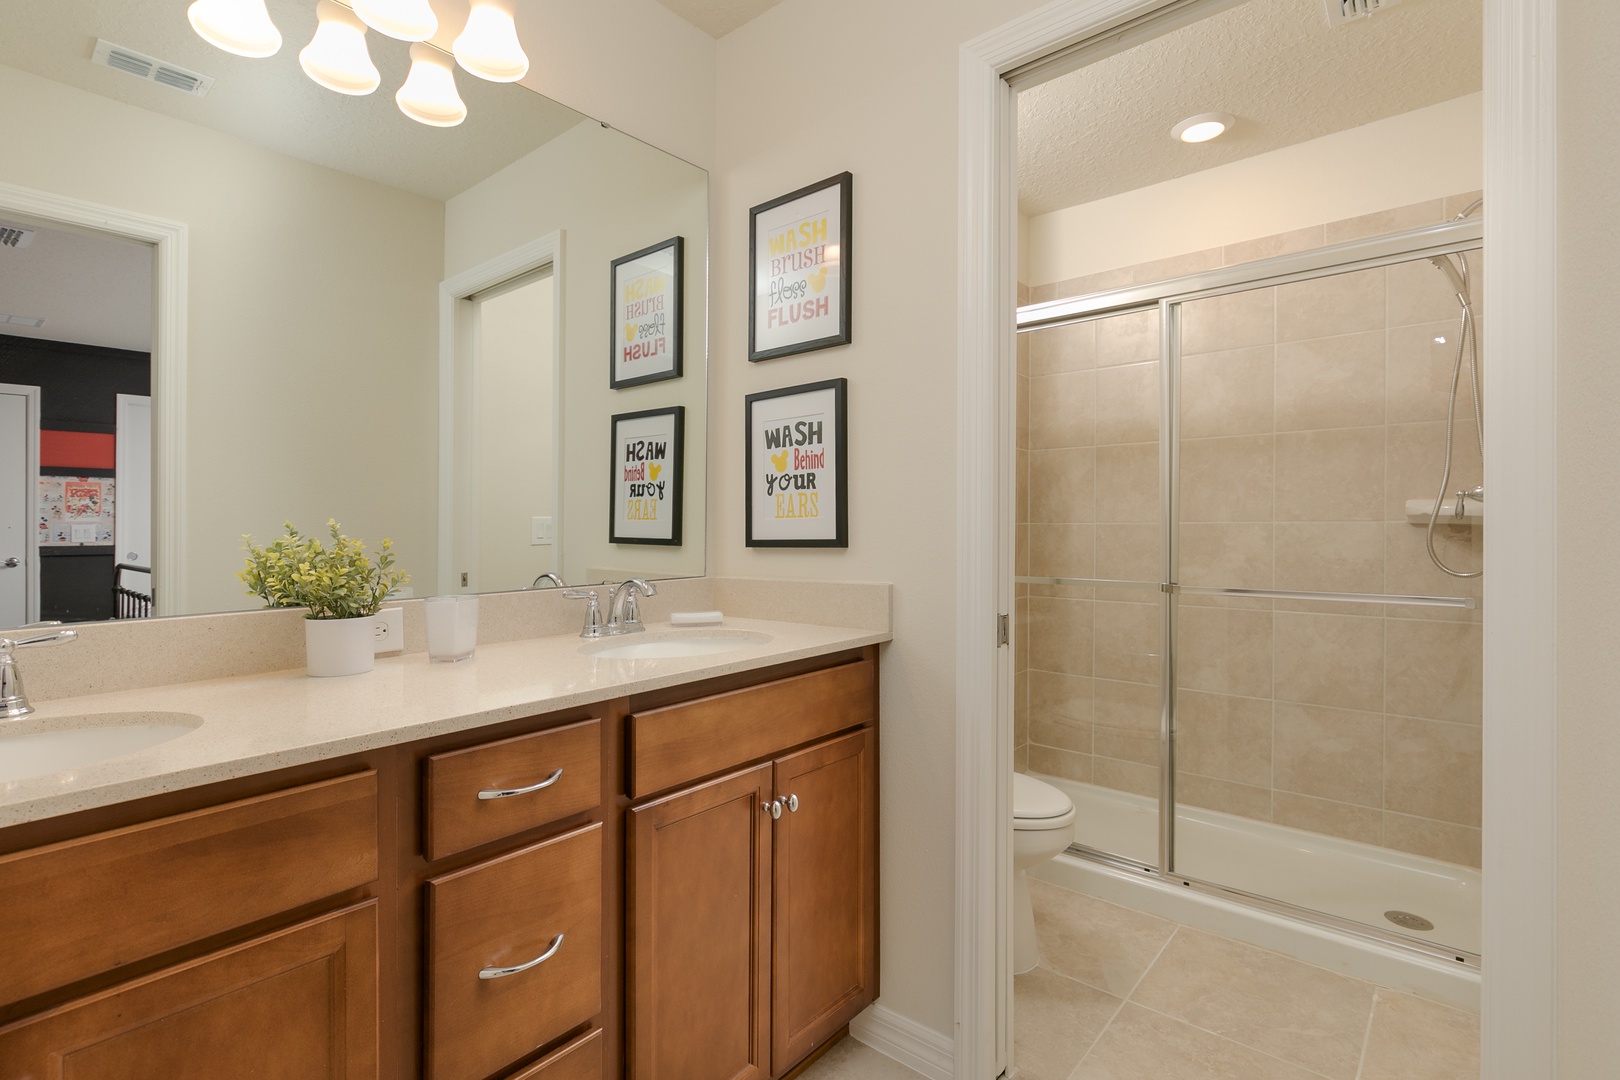 This 2nd floor en suite includes a double vanity & glass walk-in shower